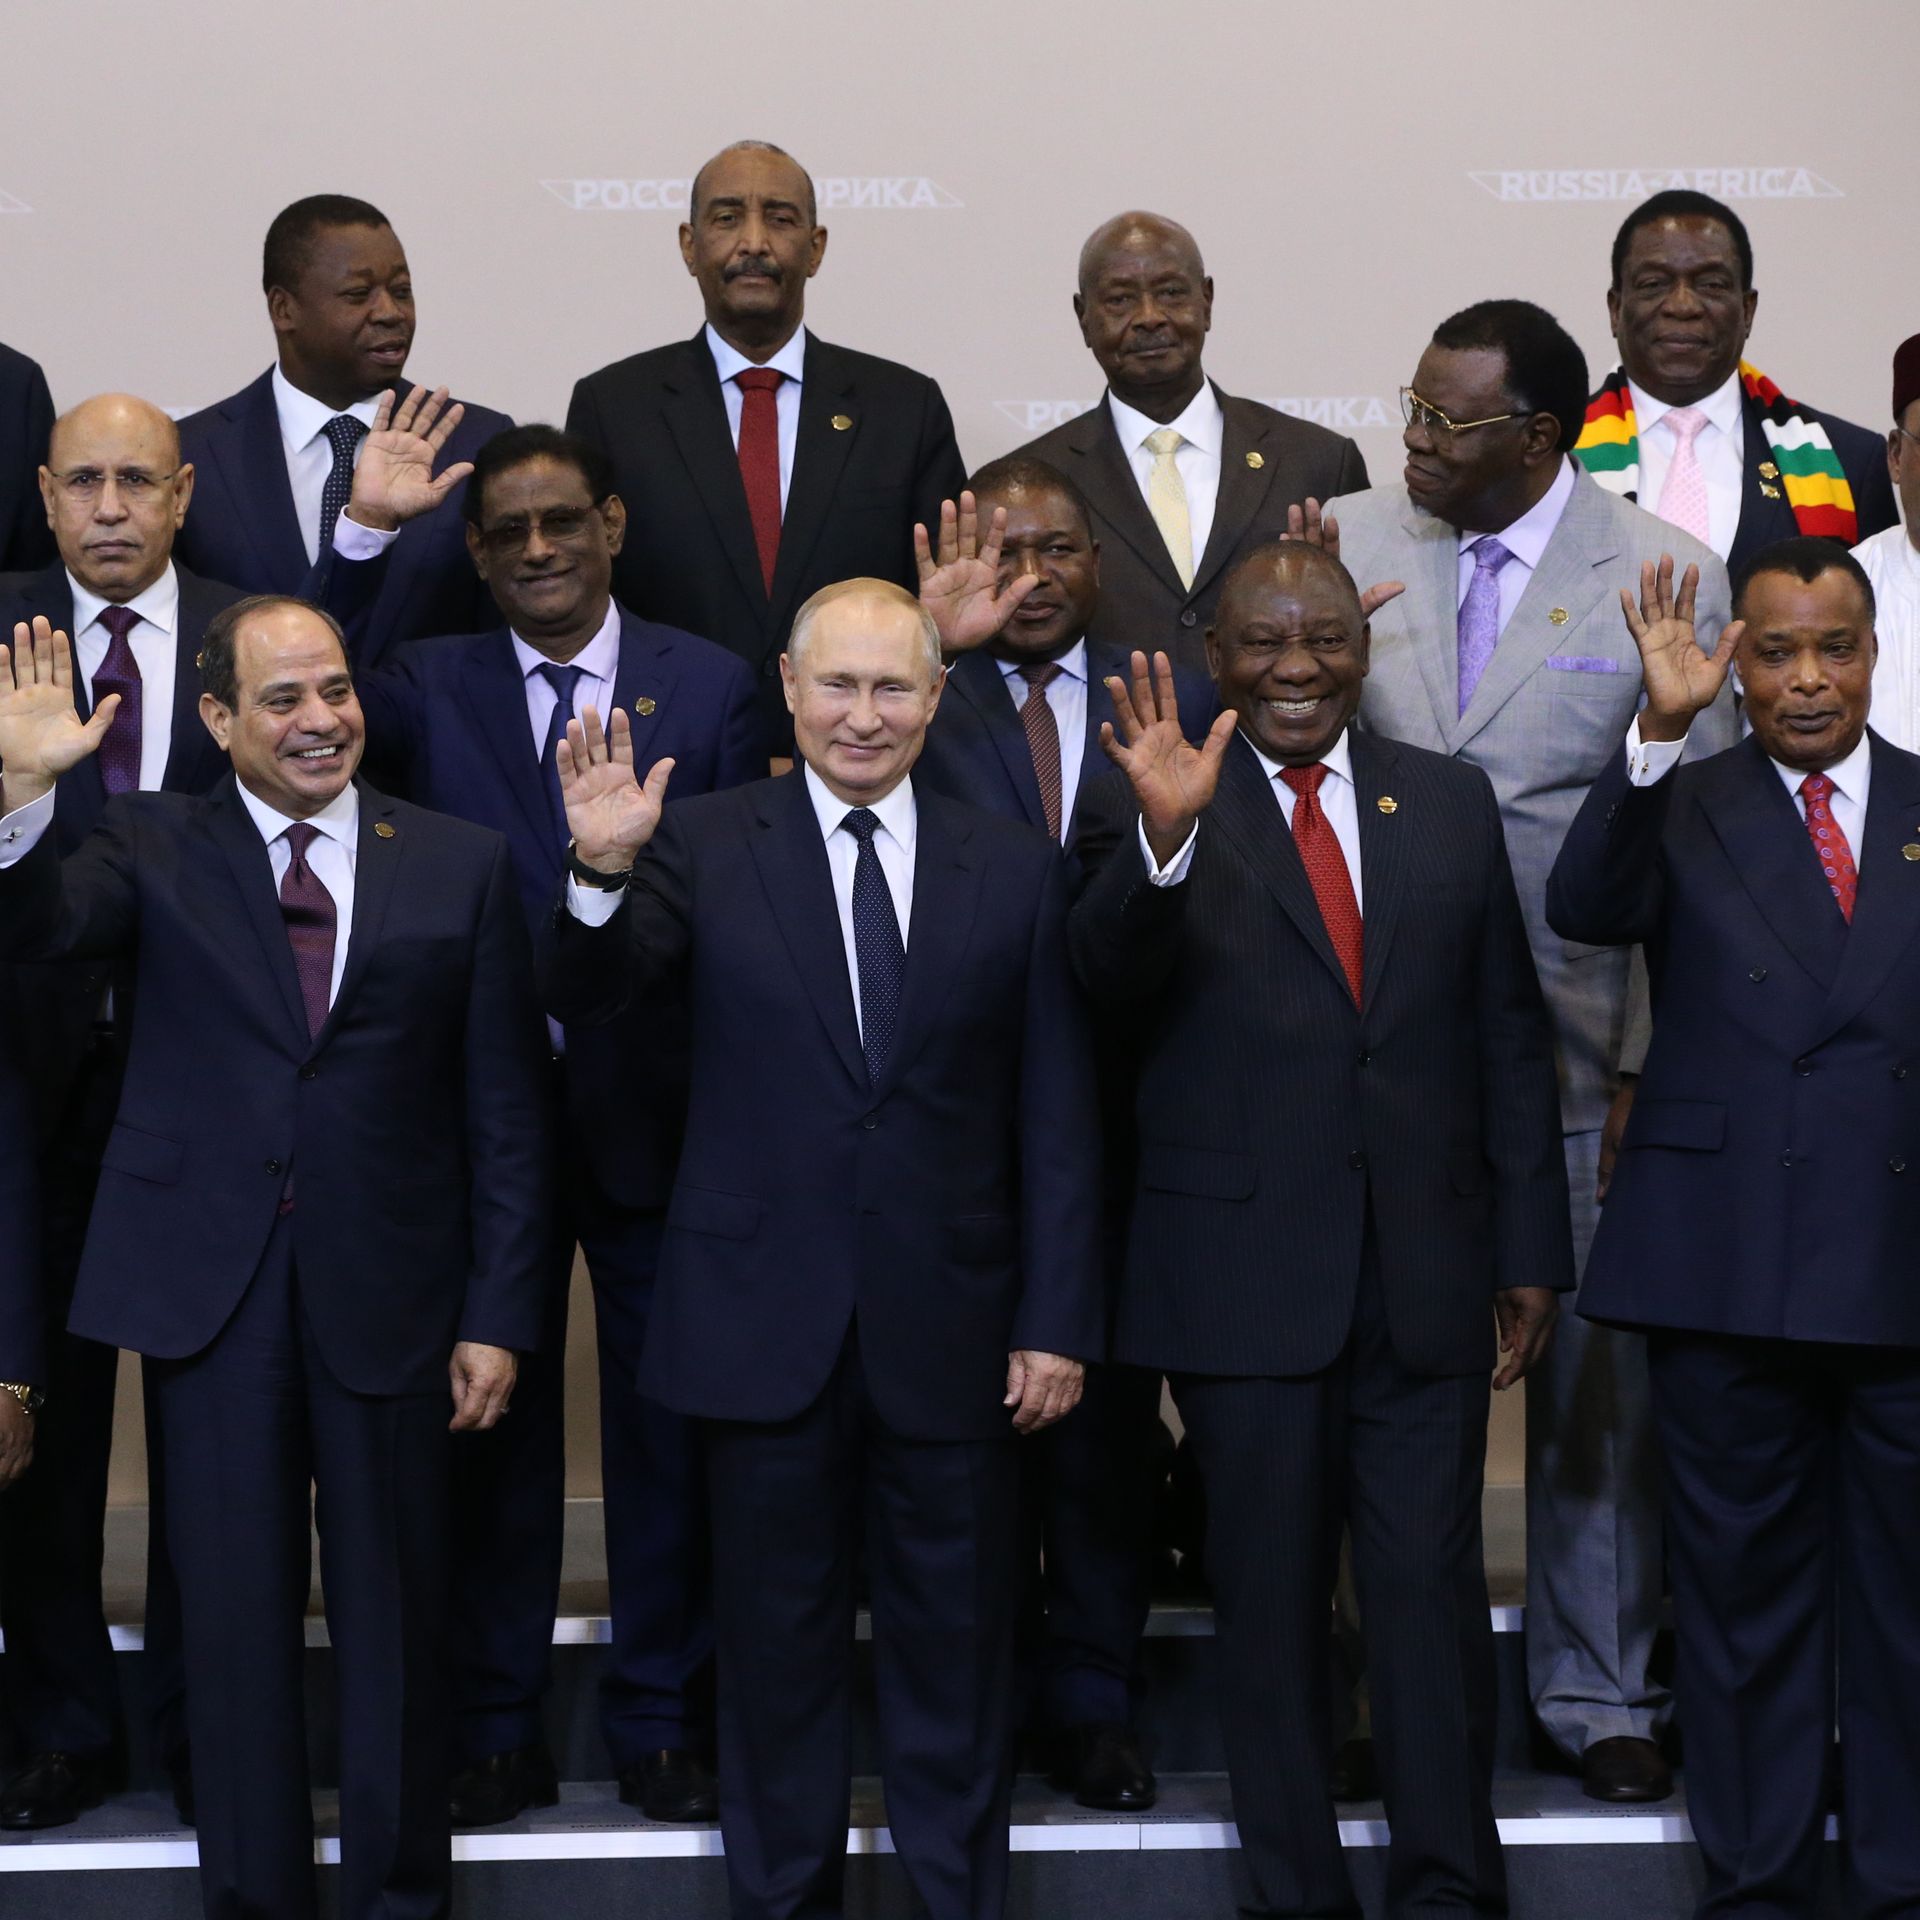 Leaders of Africa